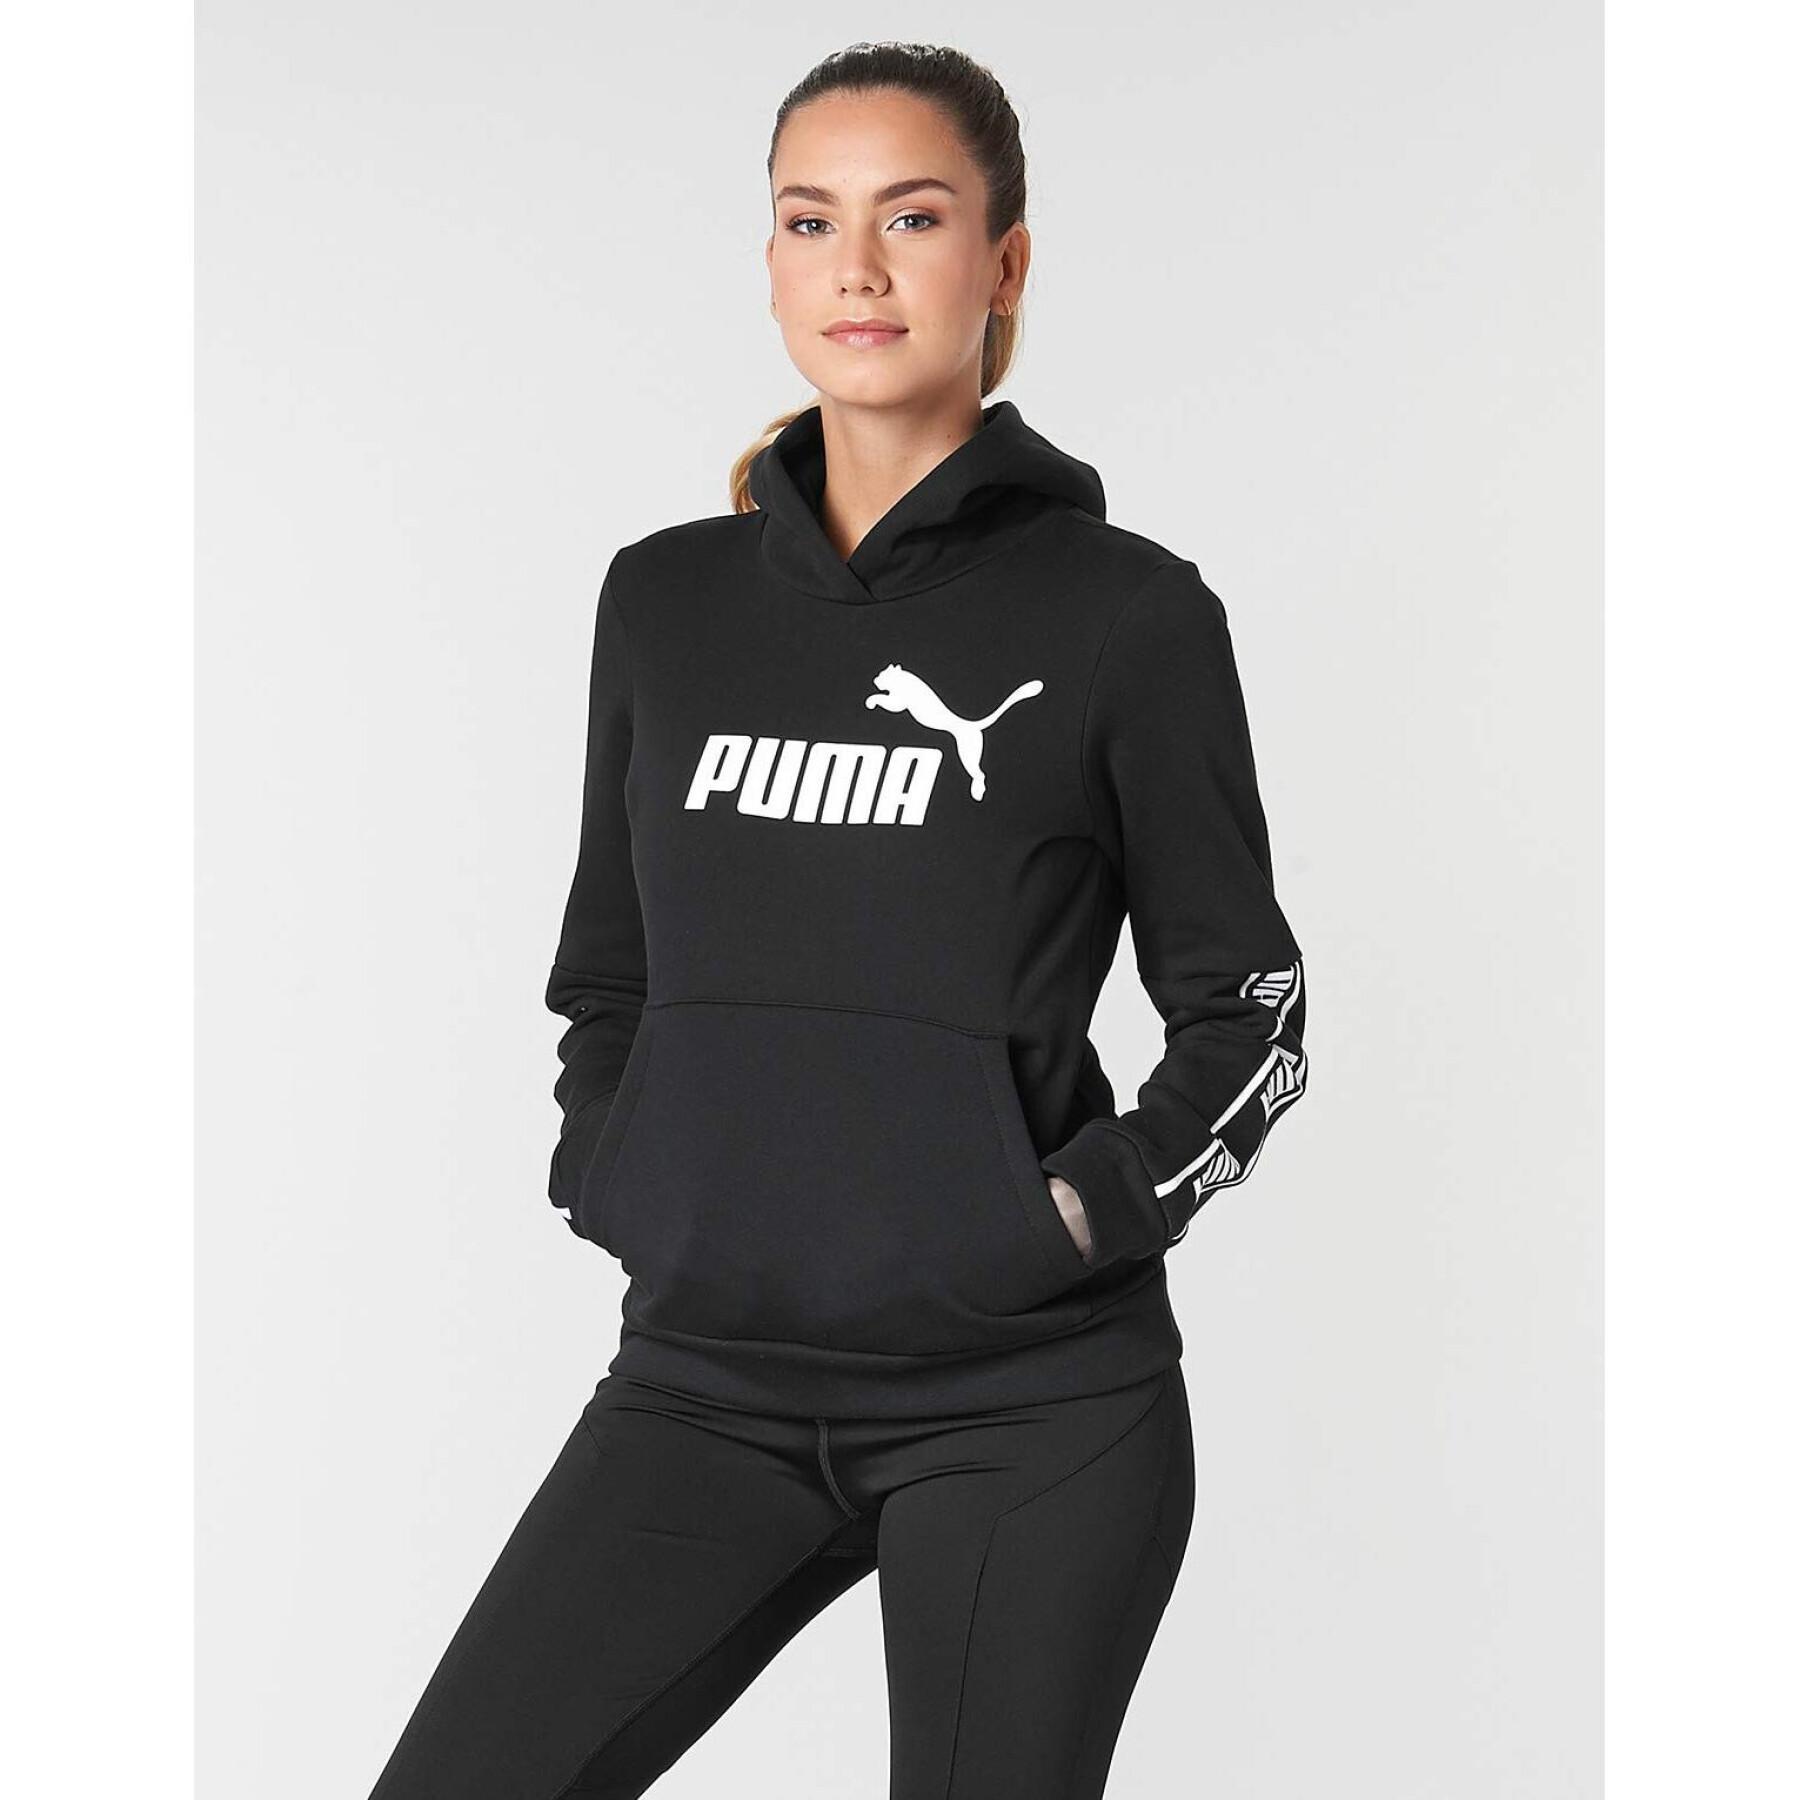 Damska bluza z kapturem Puma Amplified